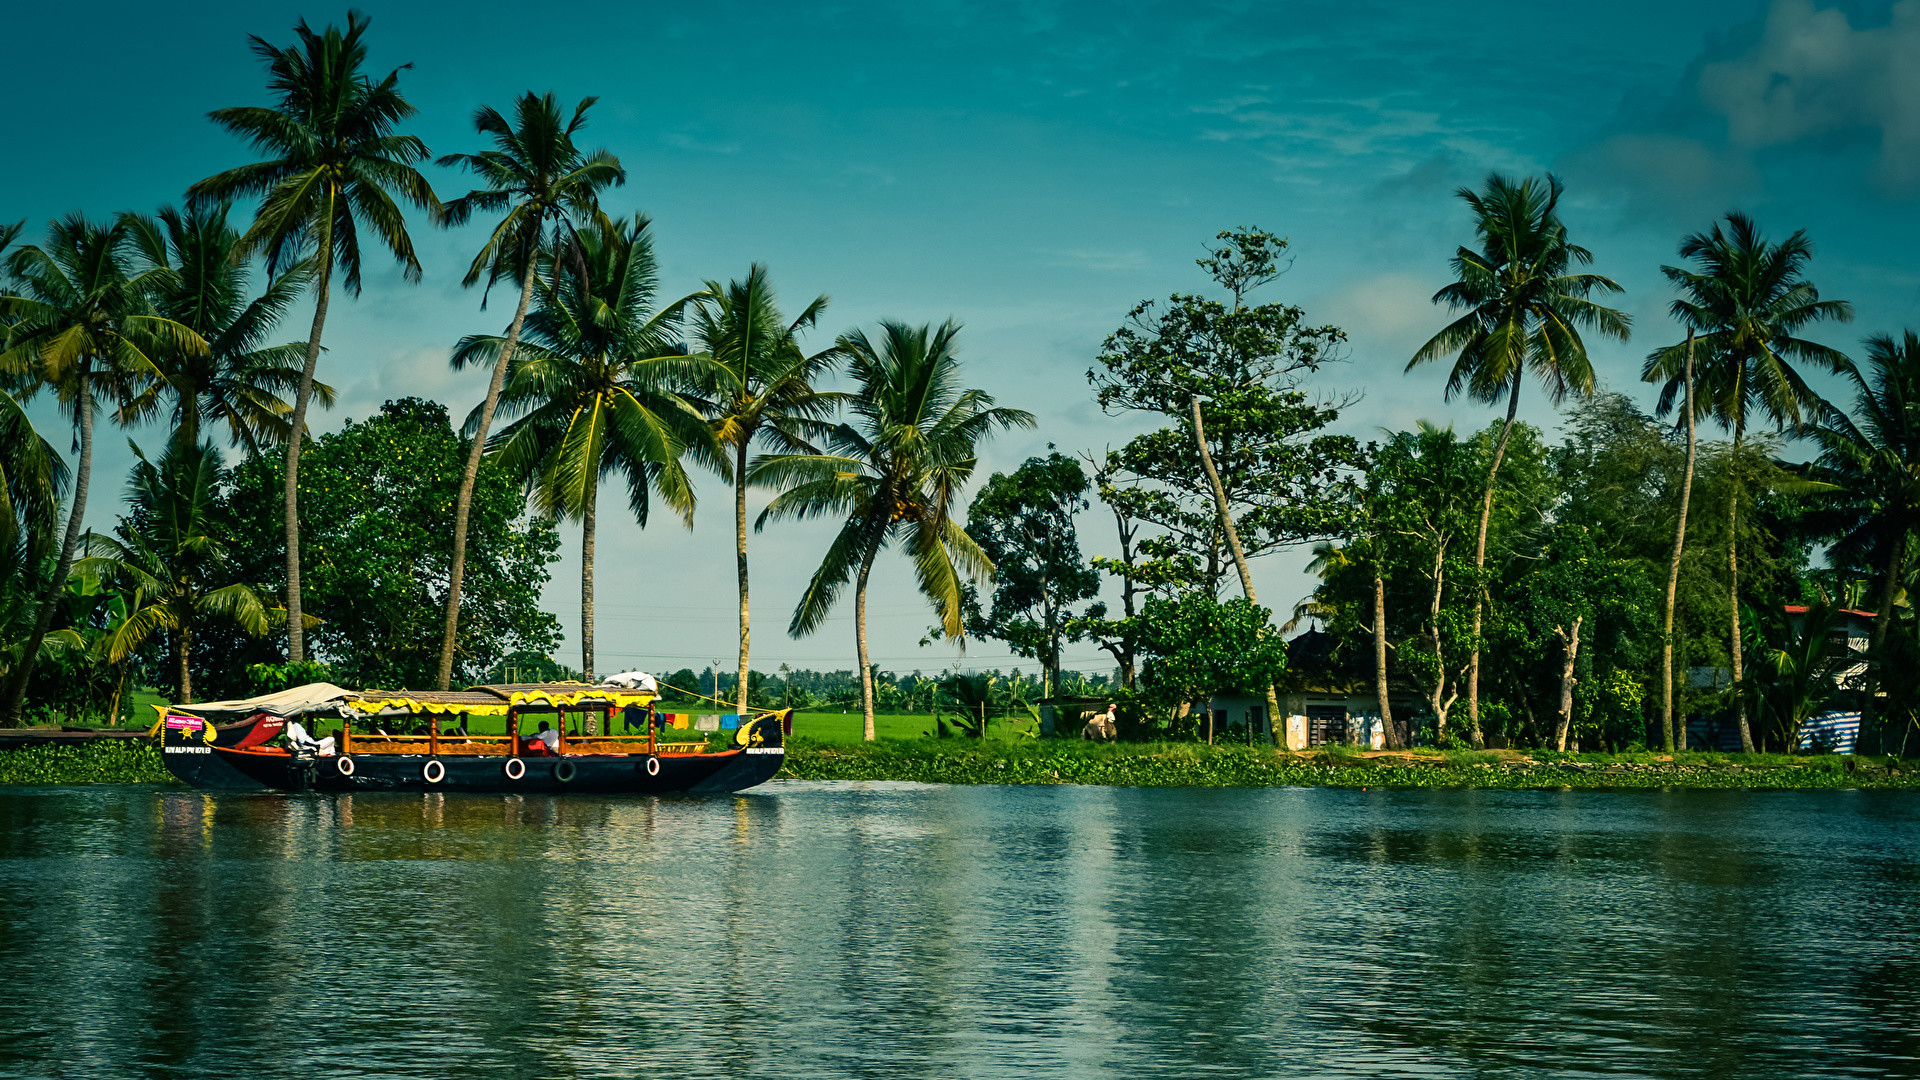 Kerala Photos, Download The BEST Free Kerala Stock Photos & HD Images